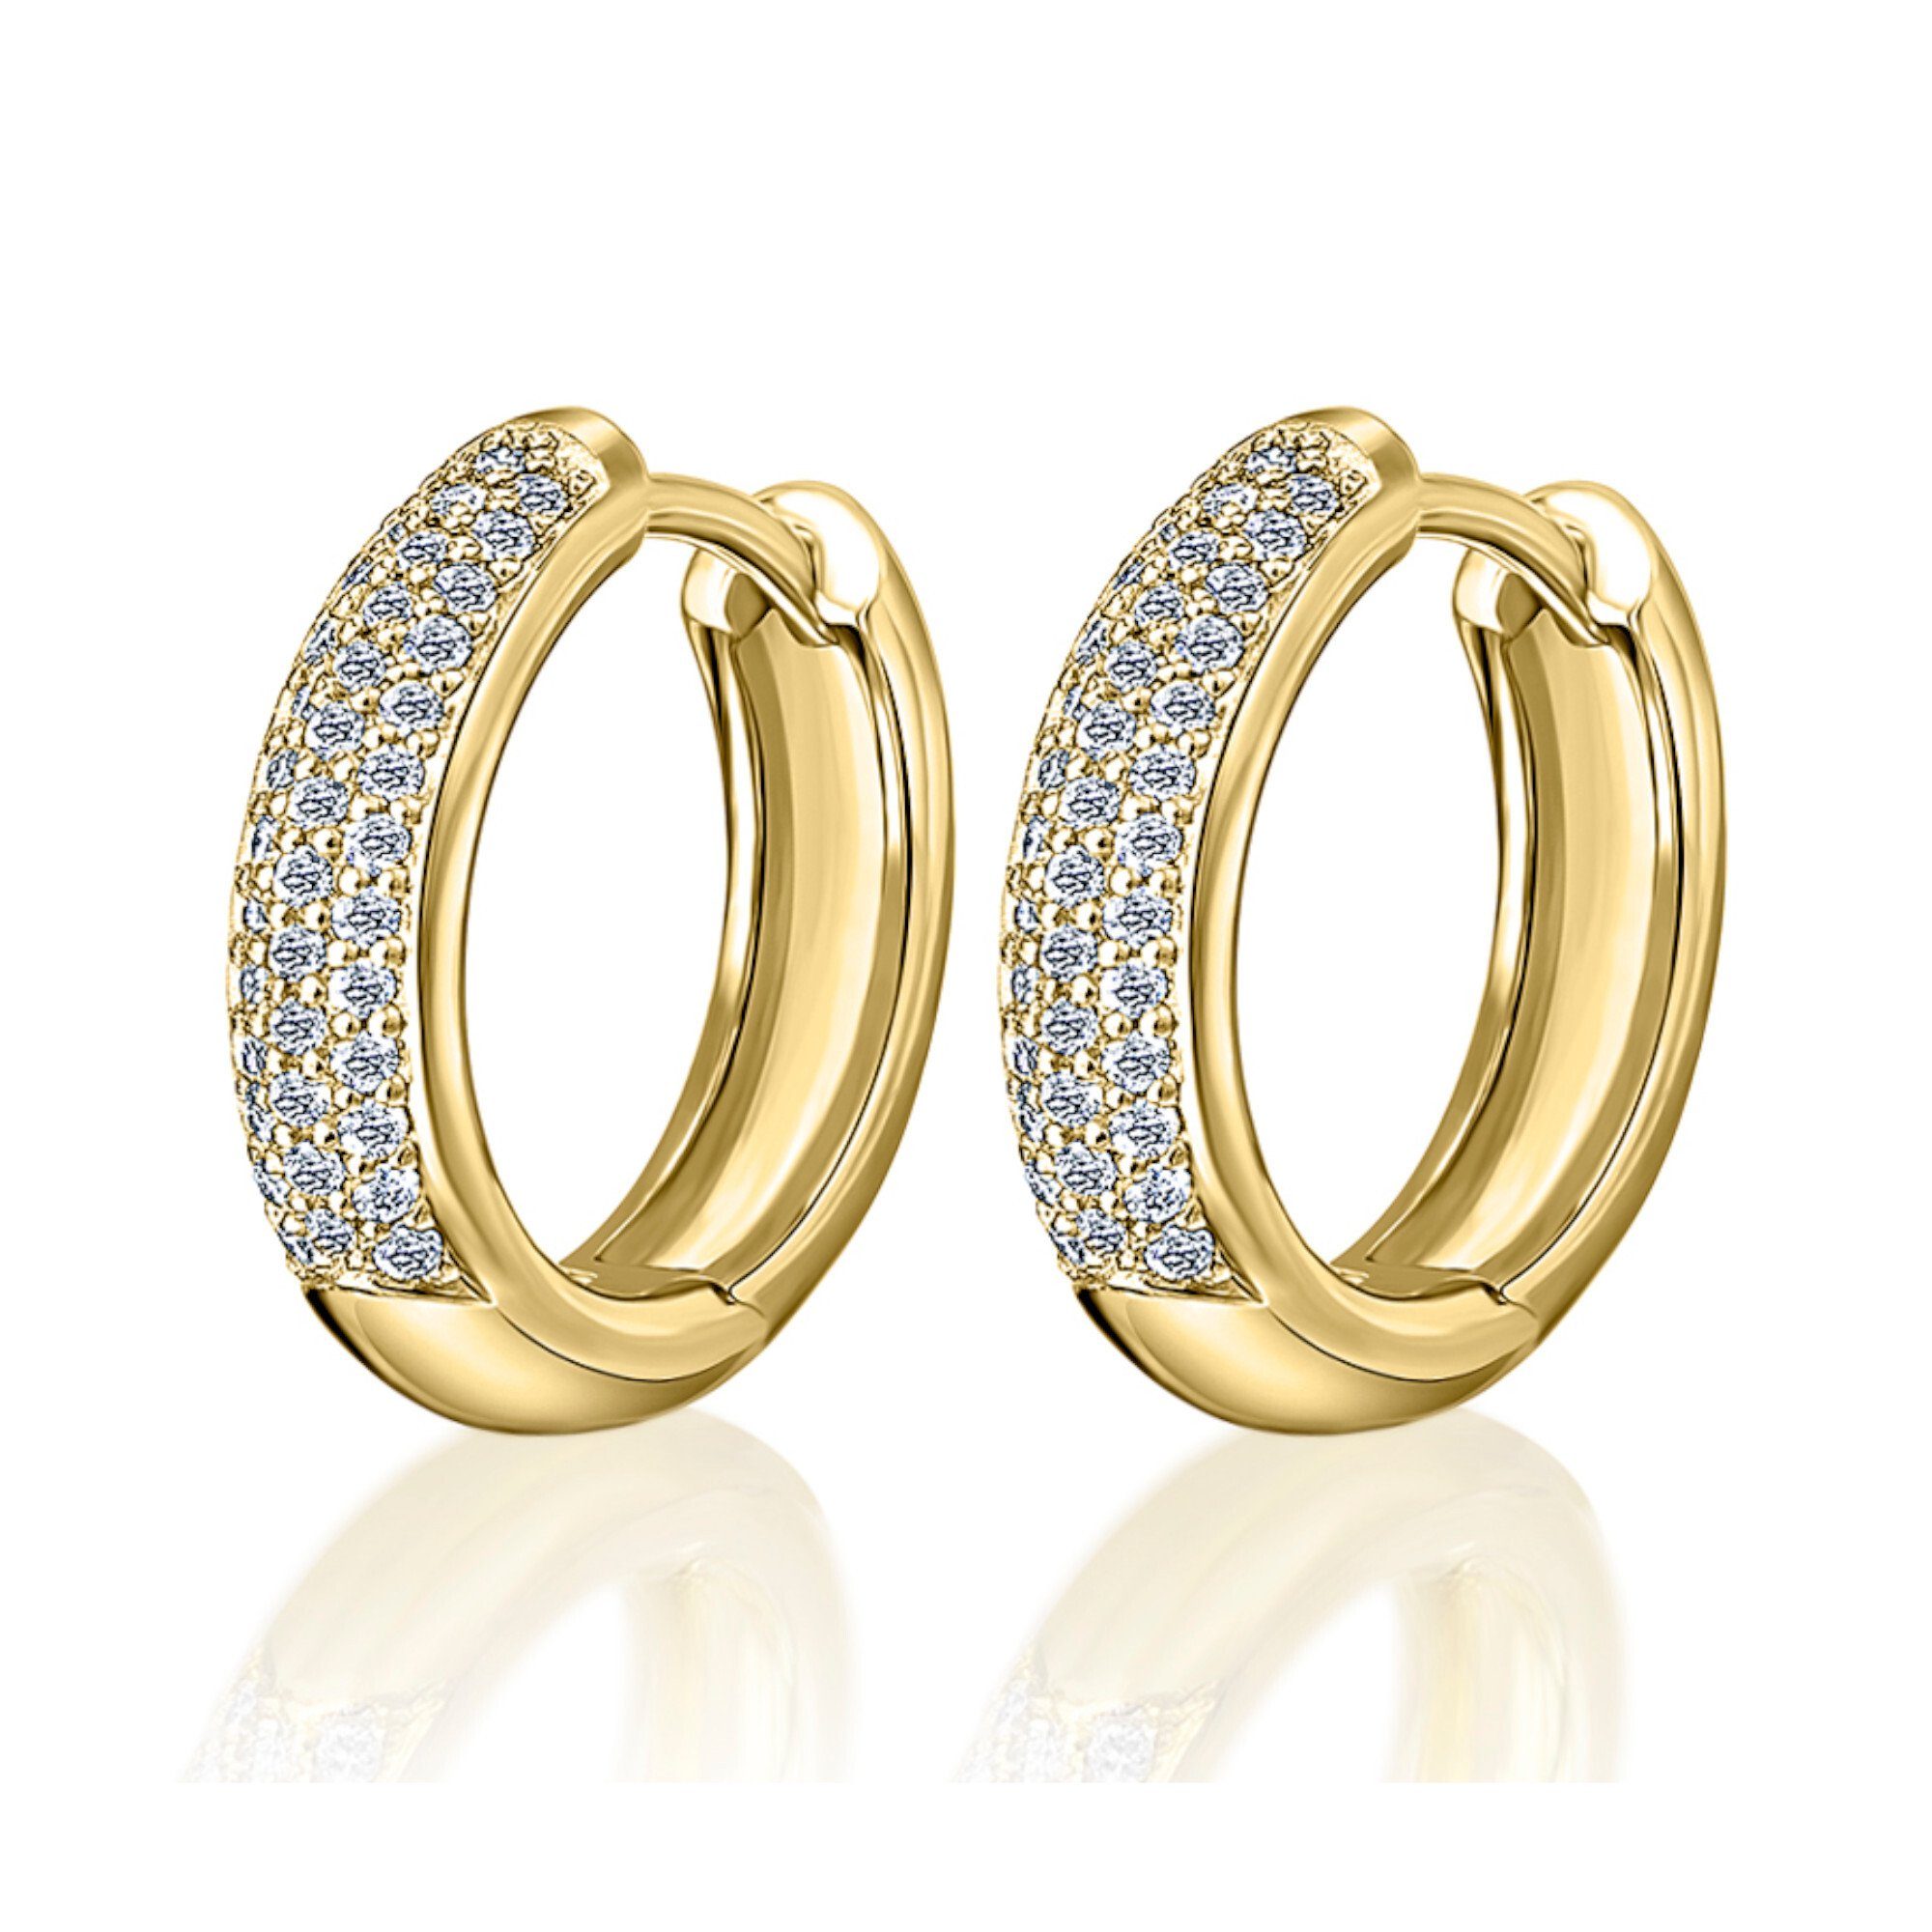 ONE ELEMENT aus 585 0.25 Diamant Creolen Gelbgold, Brillant Paar Creolen Damen Schmuck Gold ct Ohrringe